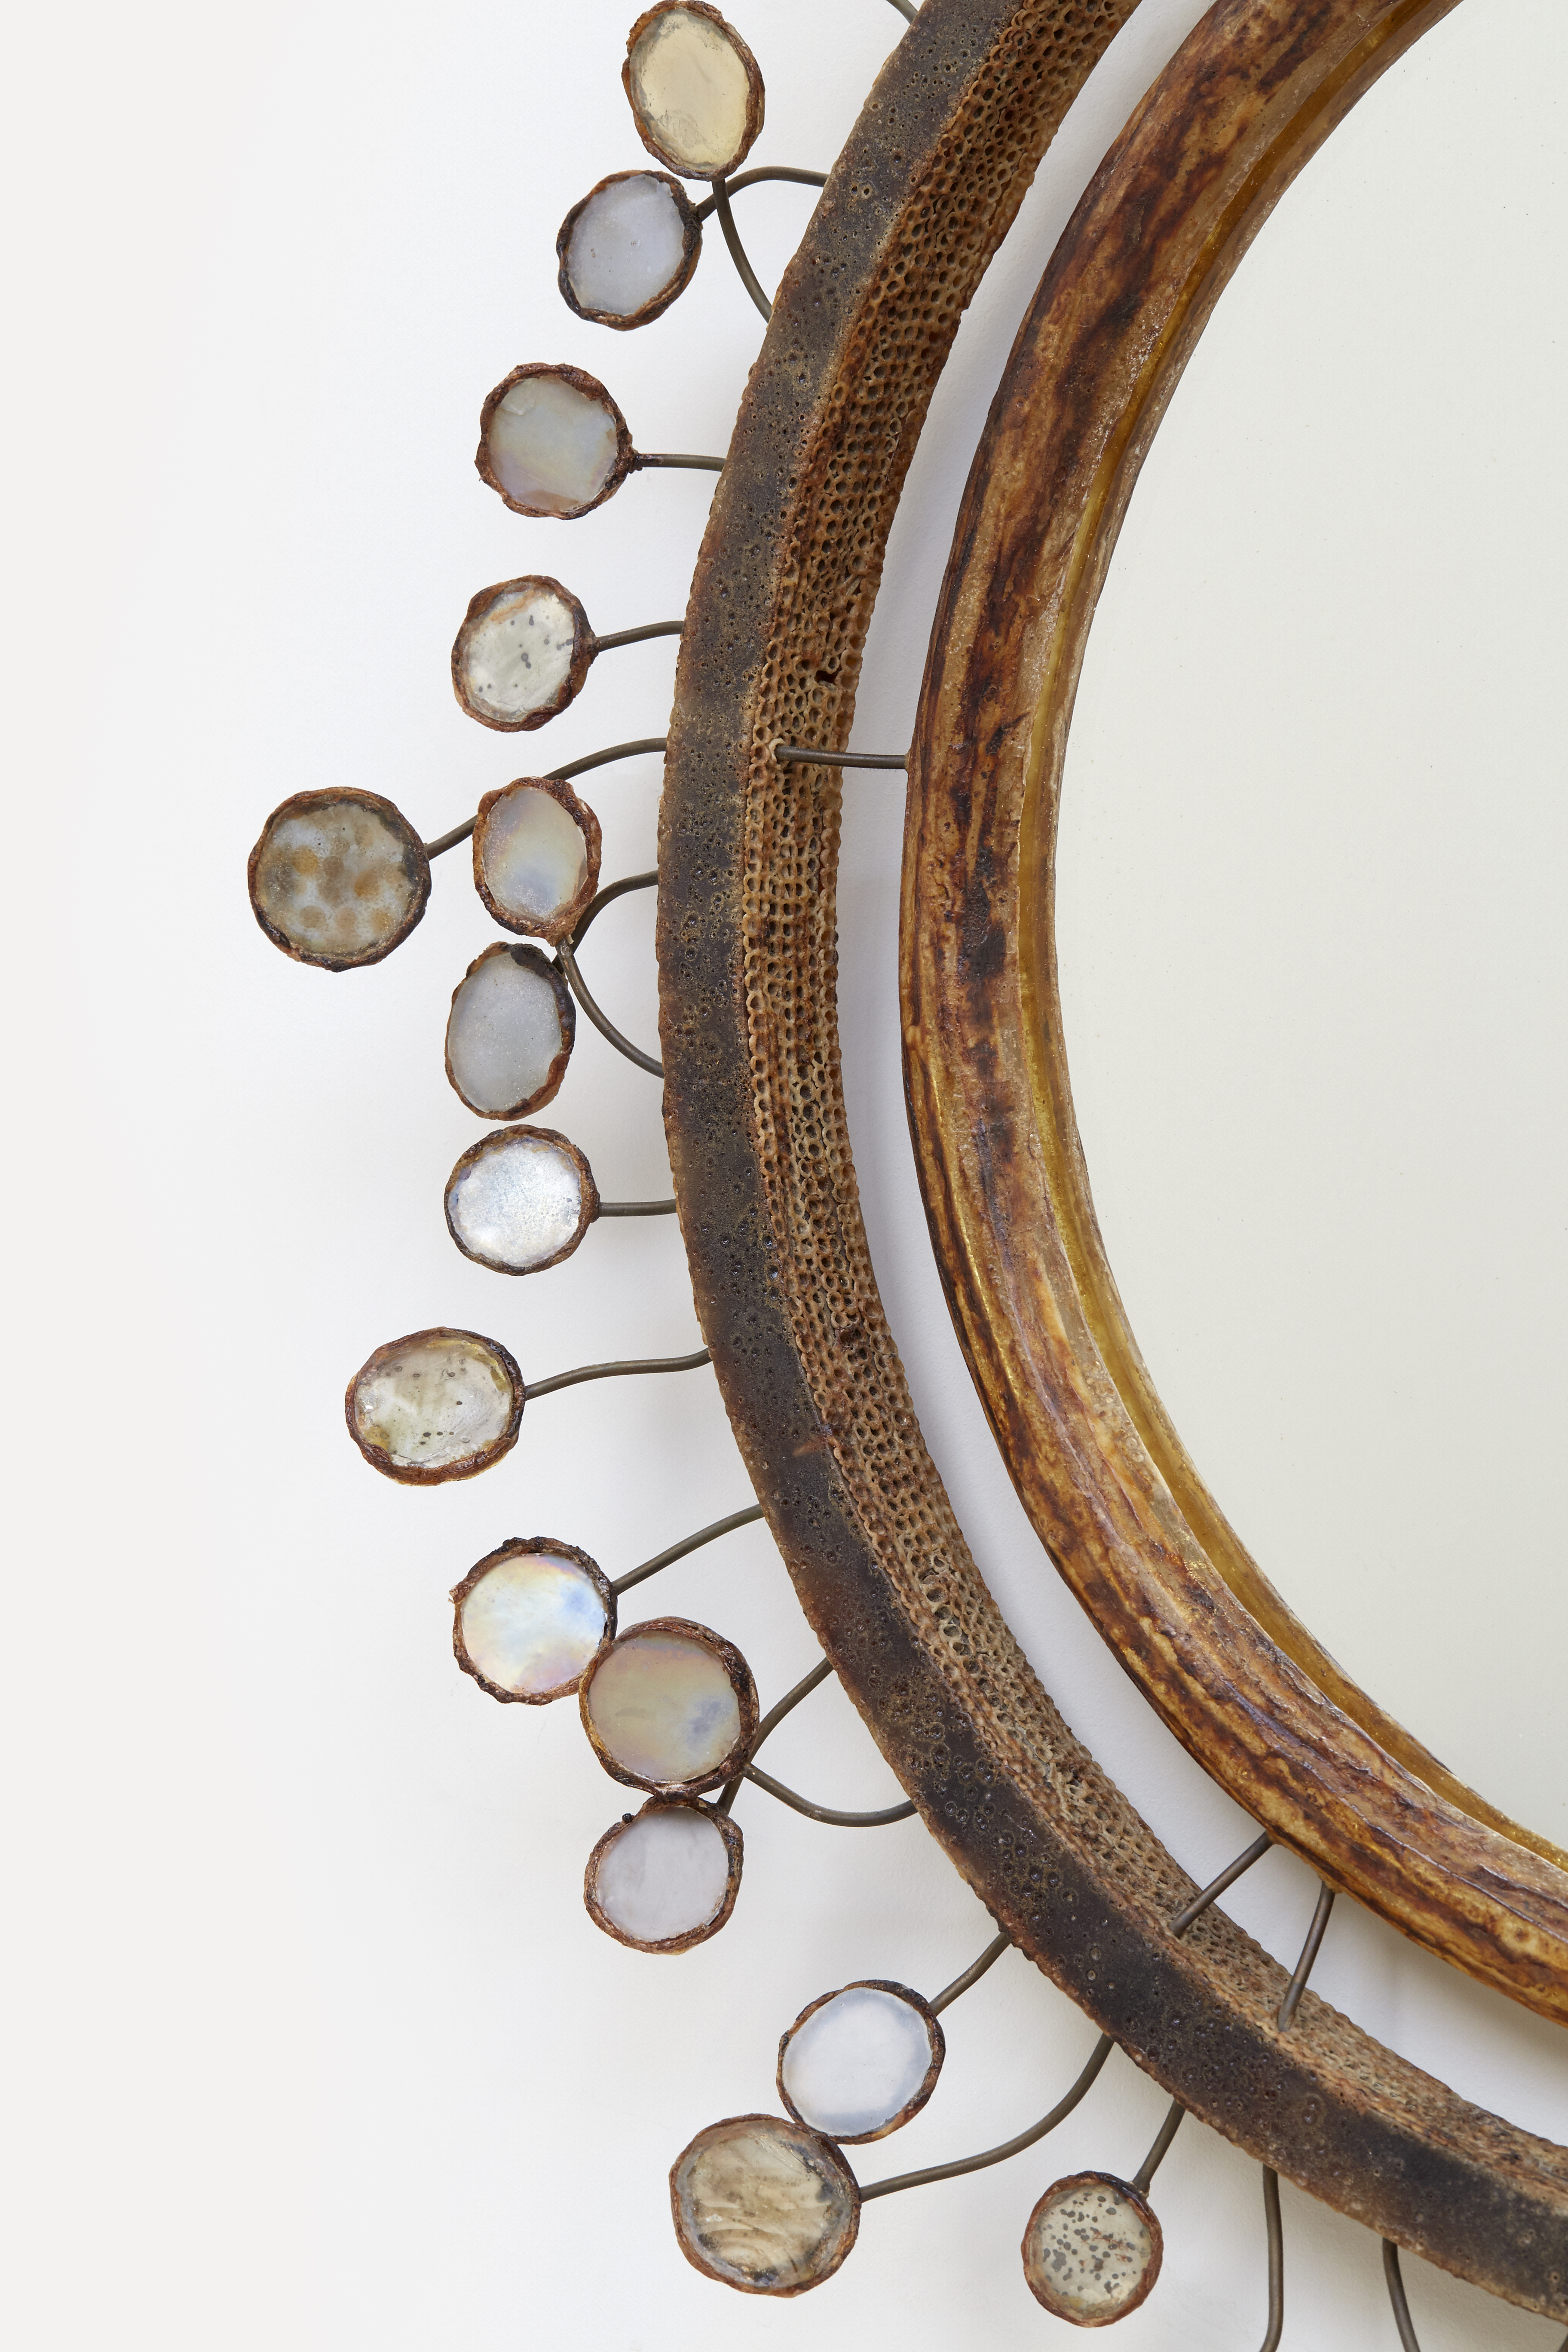 Line Vautrin, Rare “Sequins” mirror, vue 03